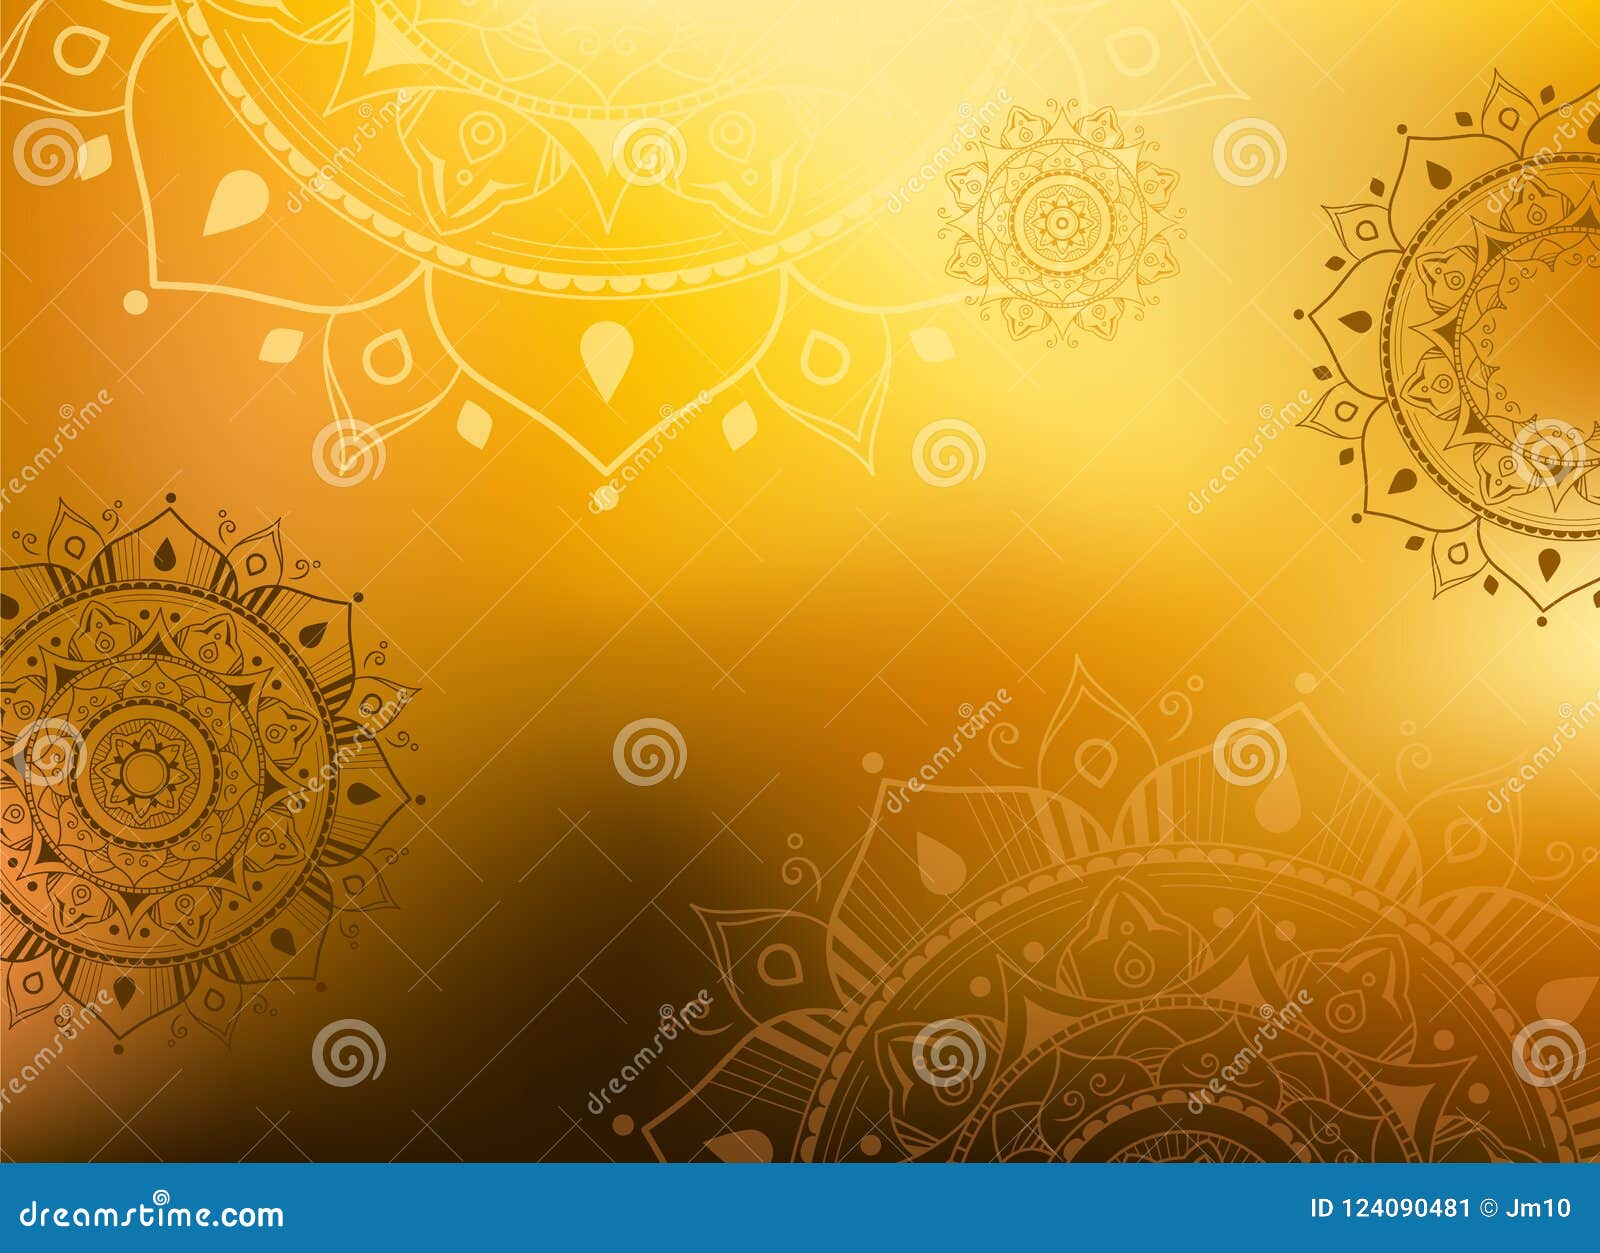 Delicate Golden Mandala Background - Illustration Stock Vector -  Illustration of mandala, vector: 124090481